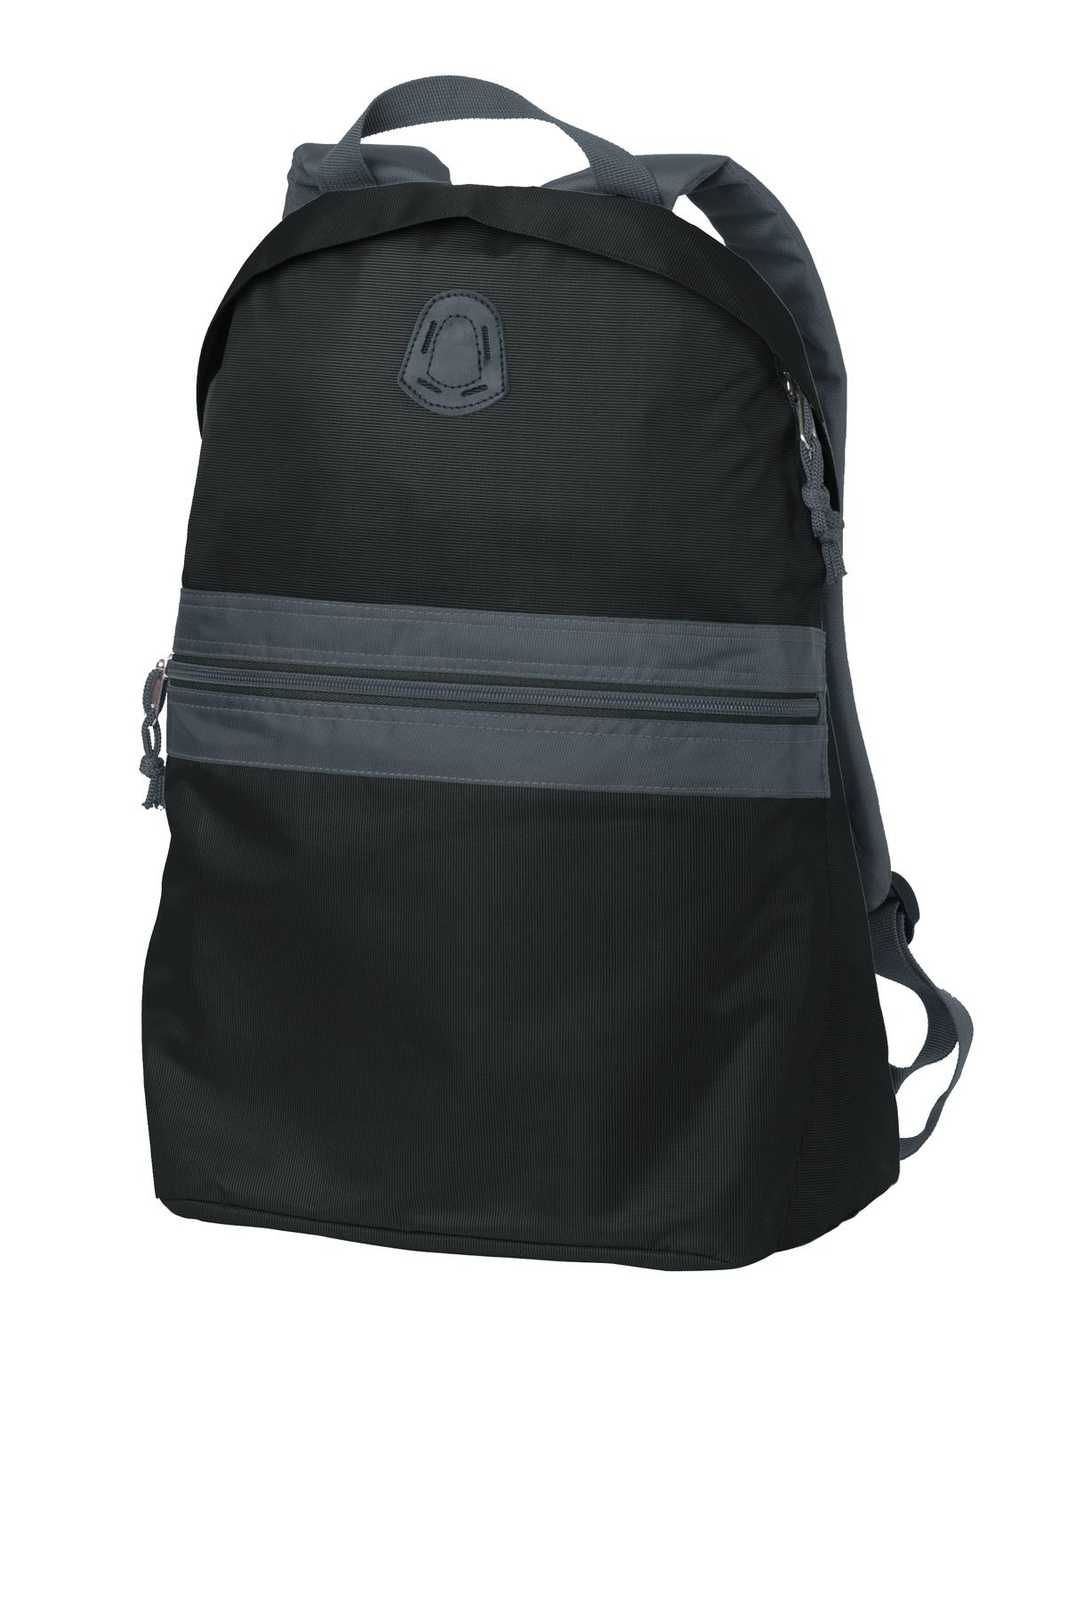 Port Authority BG202 Nailhead Backpack - Nearly Black Smoke Gray - HIT a Double - 1